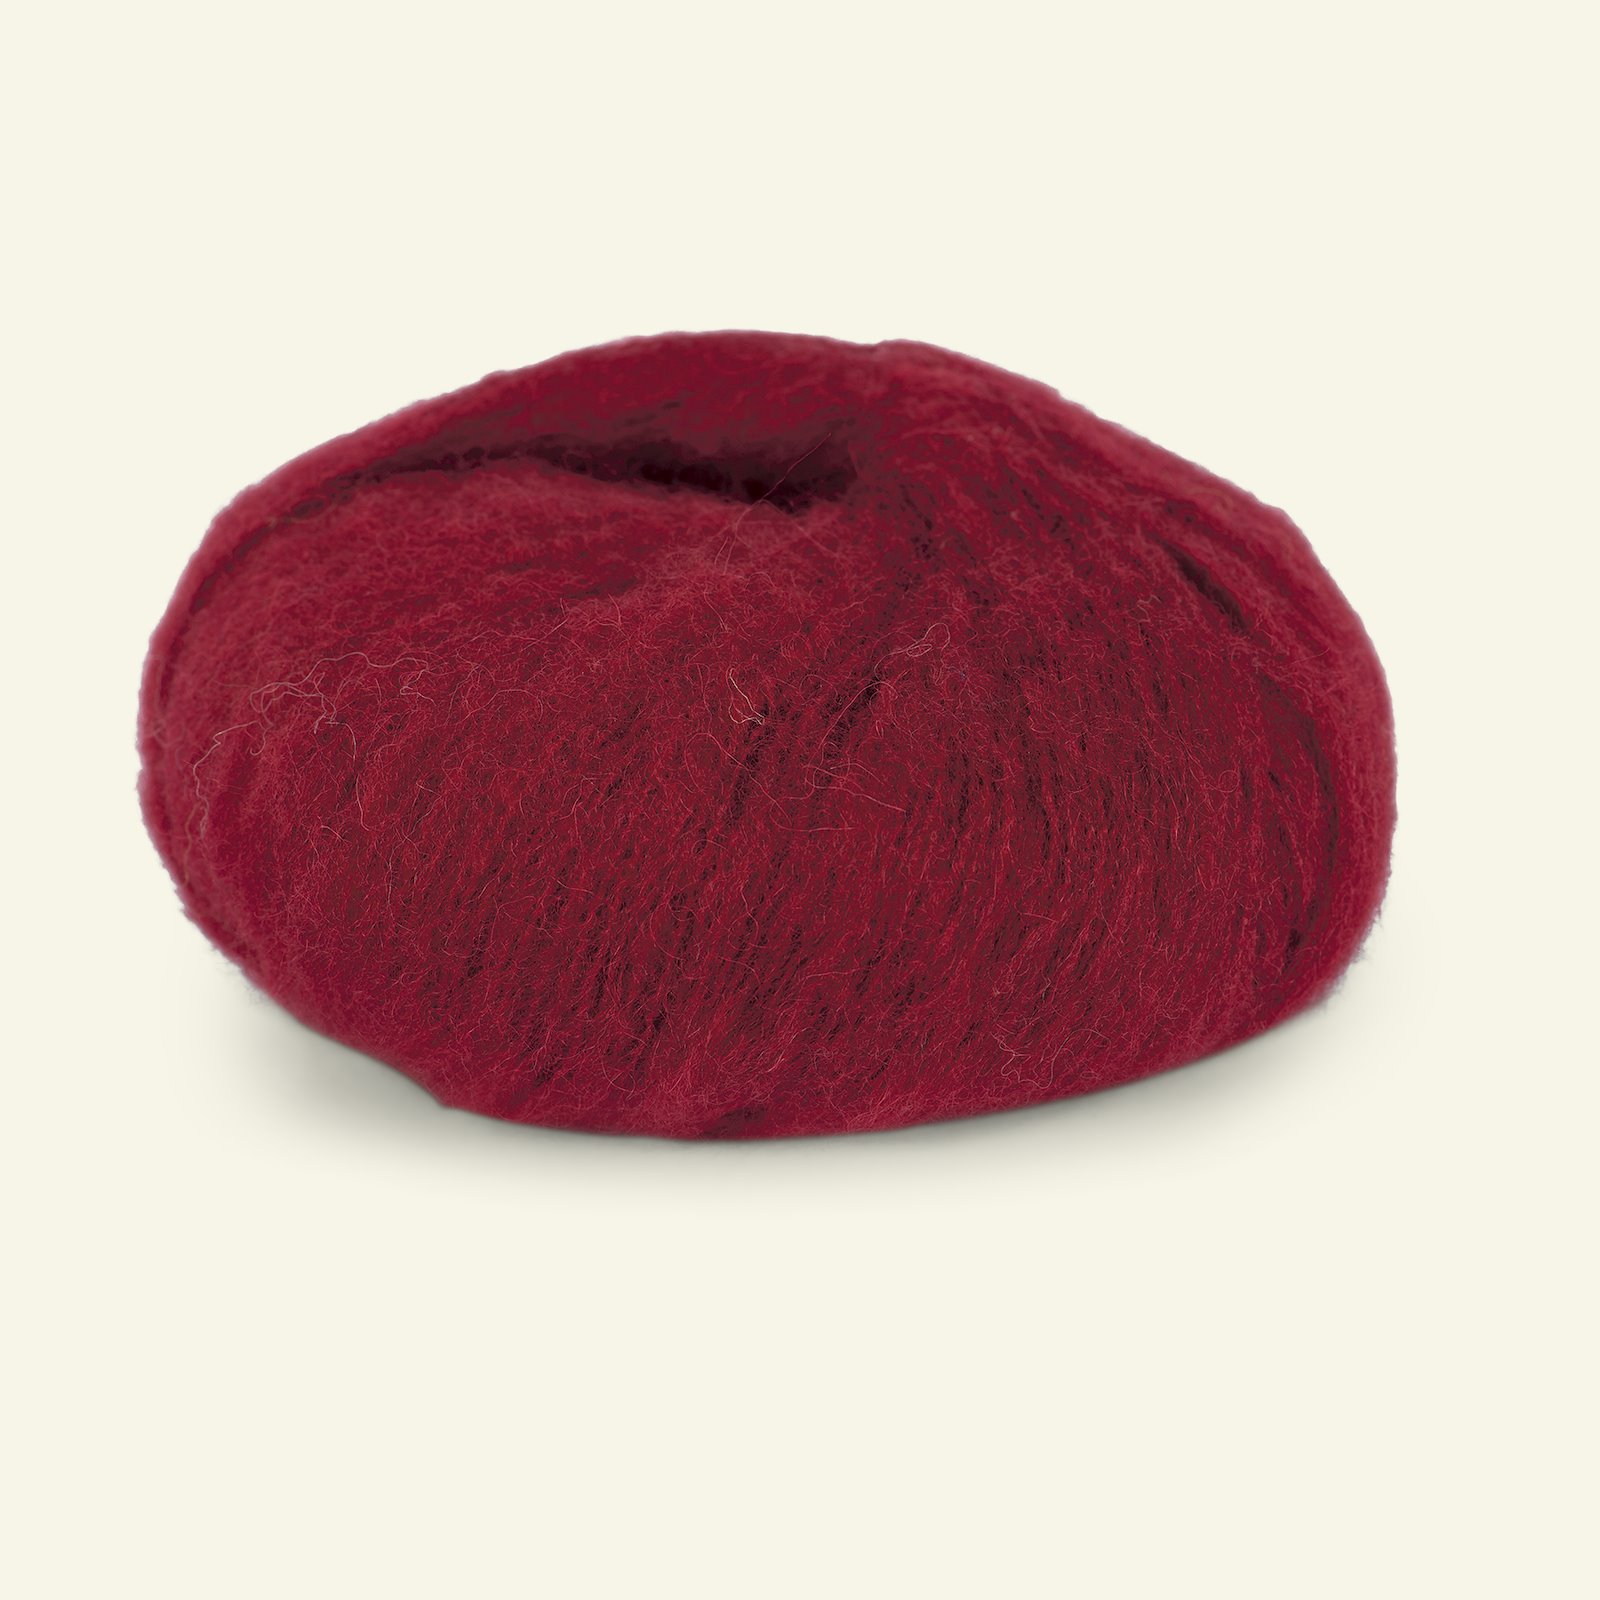 Du Store Alpakka, airy alpaca yarn "Faerytale", dark red (711) 90000579_pack_b